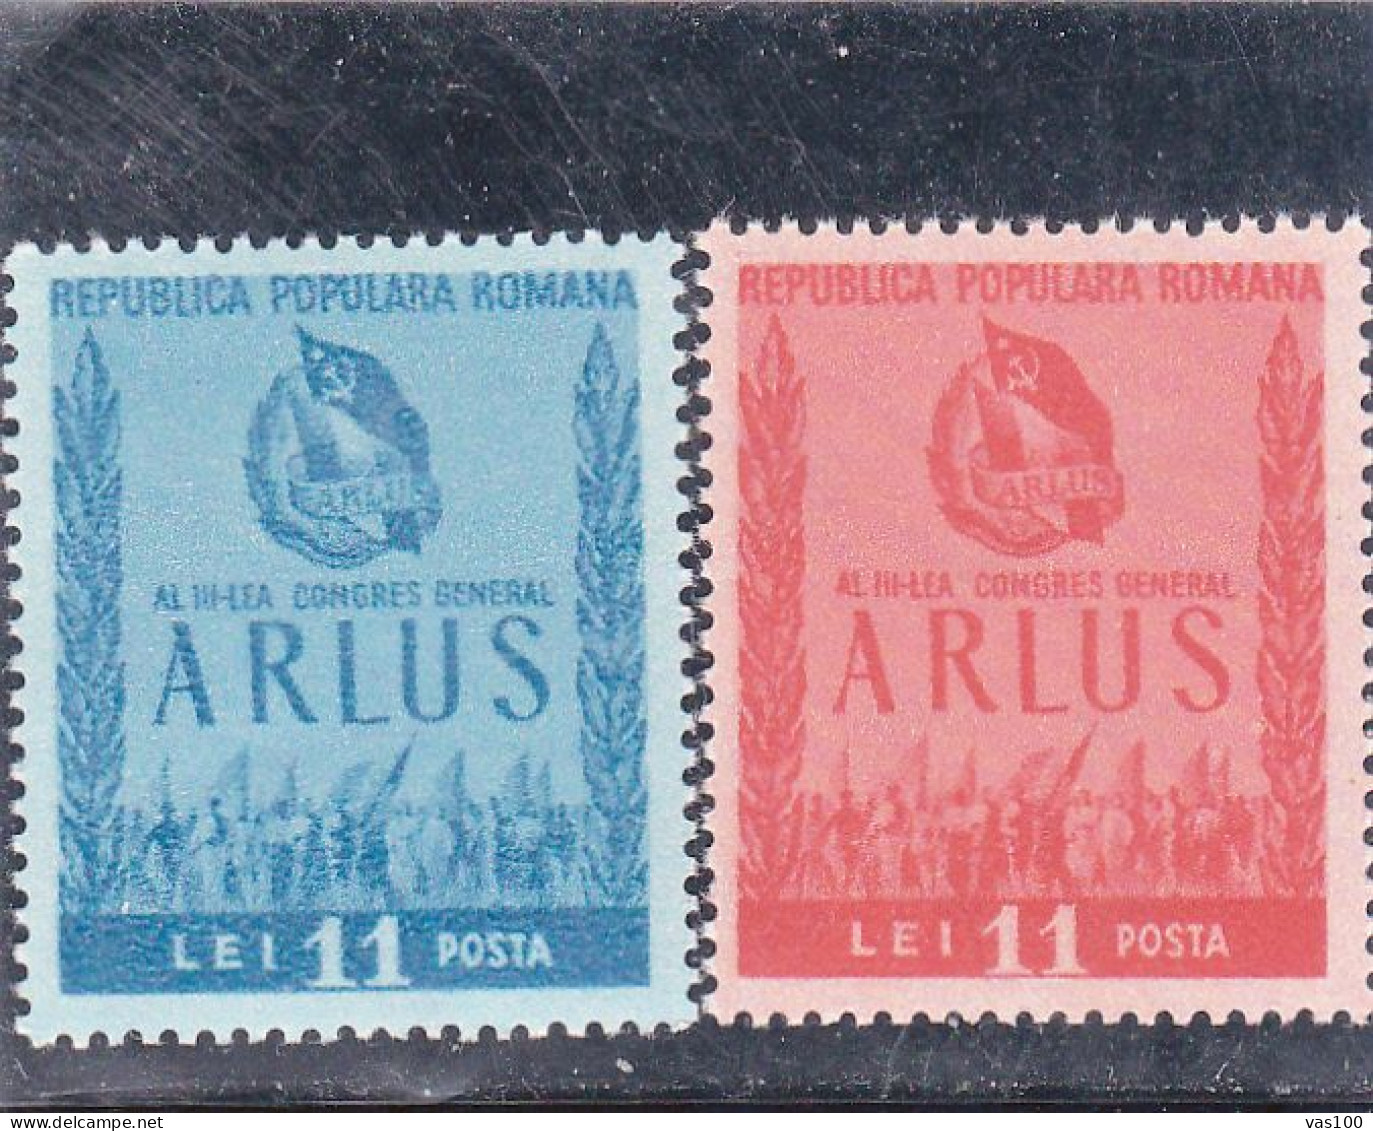 ARLUS CONGRESS,1950,MI.1240/41, MNH**, ROMANIA. - Unused Stamps